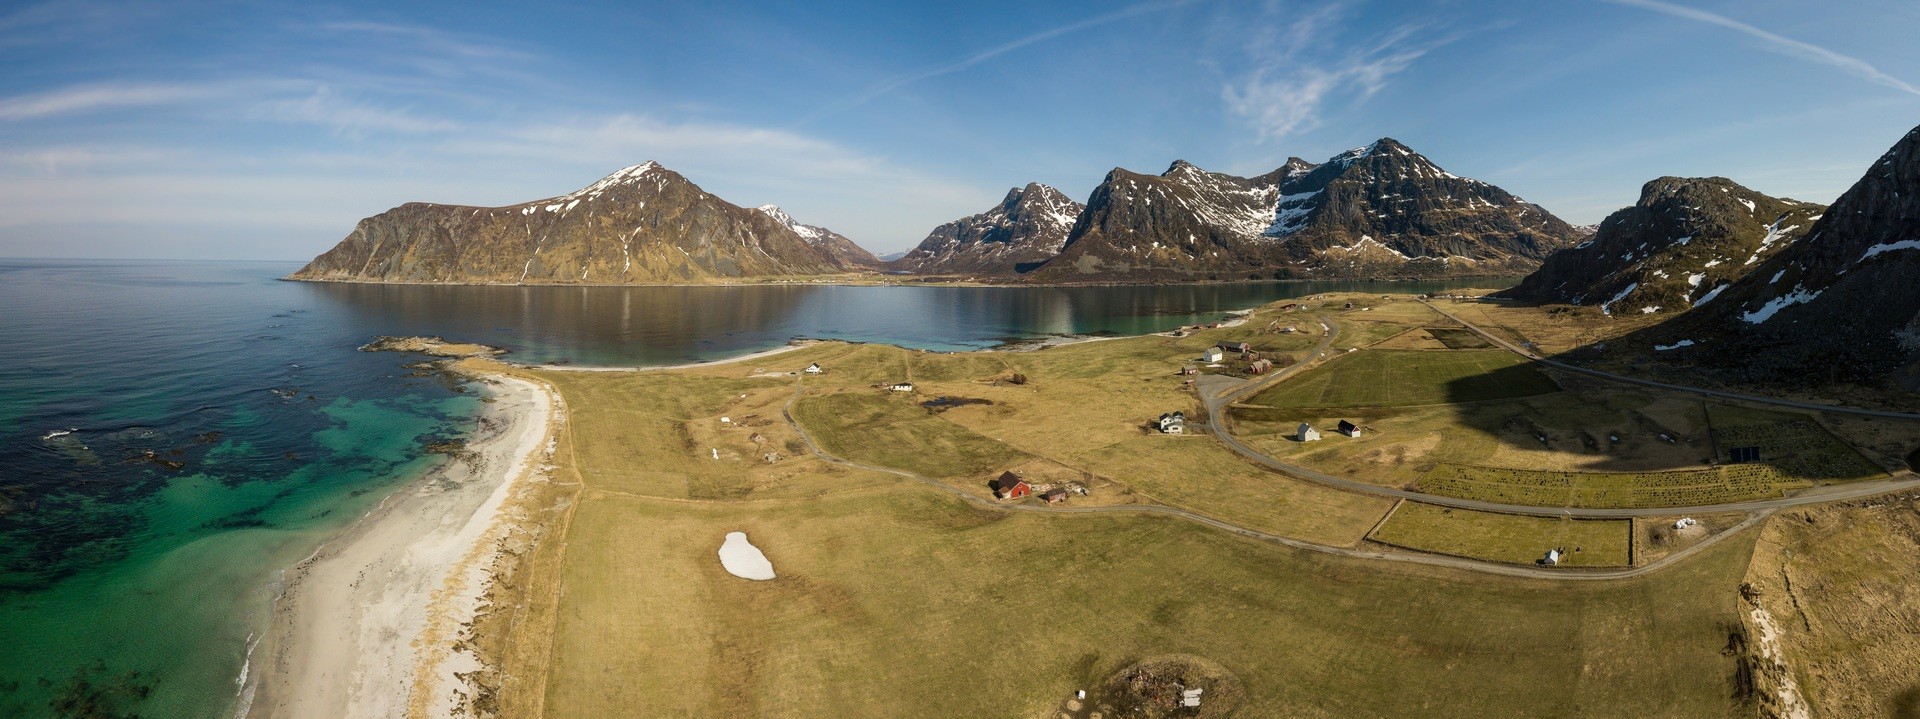 Panoramaaufnahmen Drohne Luftbild Tourismus Marketing